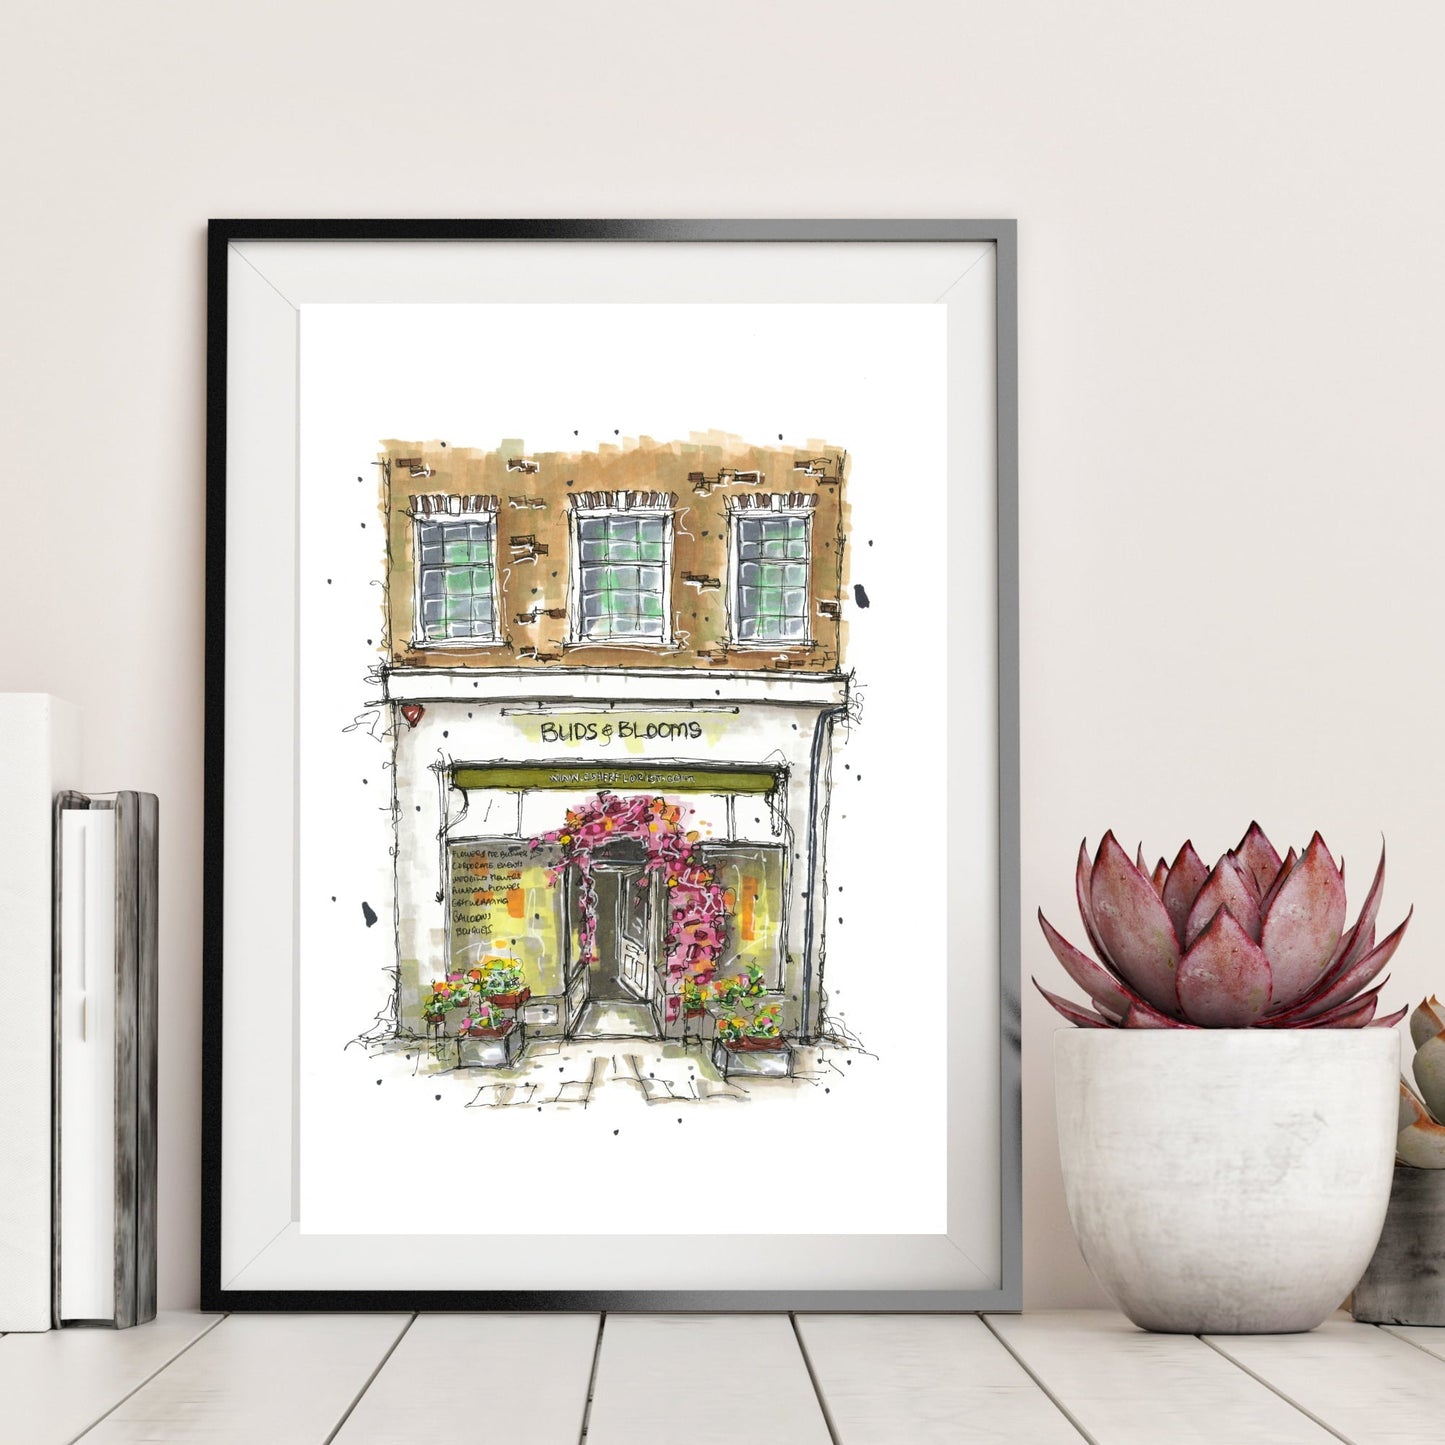 DTS0038 - Buds & Blooms, London, Storefront Print, White and Brown, Architectural Sketch, Corner Shop, Art print, Downtown Sketcher, Wynand van Niekerk 